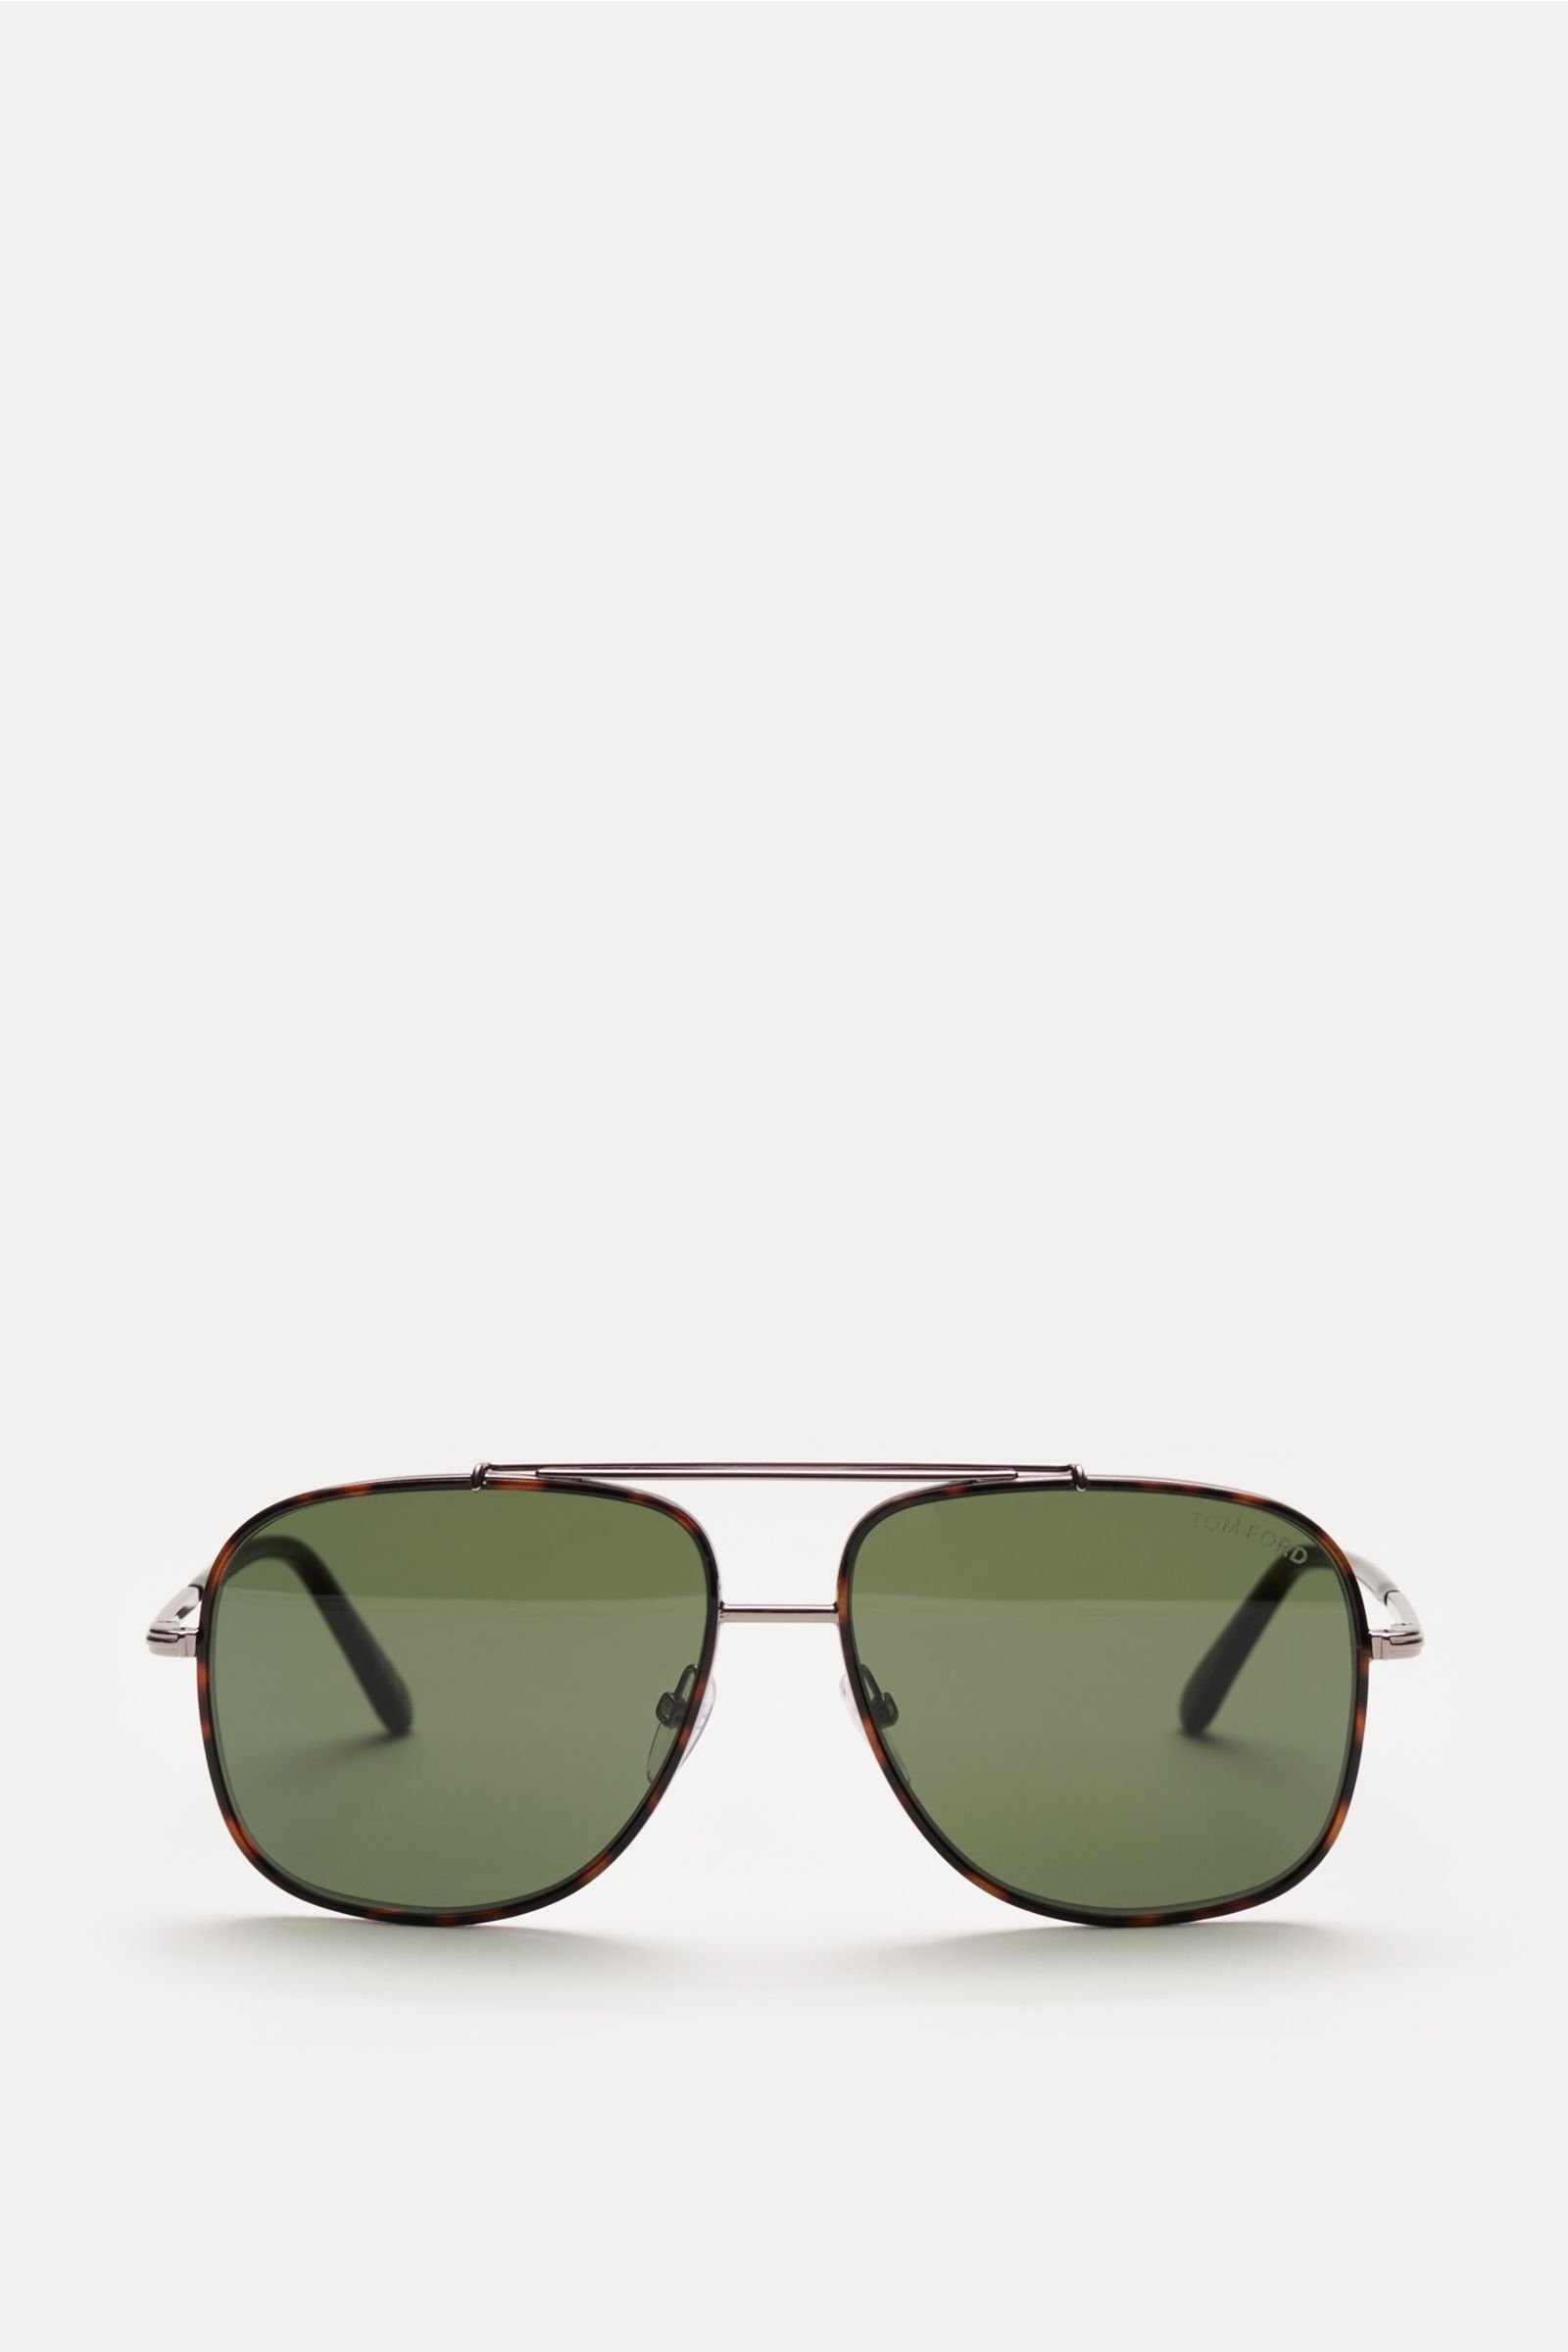 'Benton' sunglasses silver/brown patterned/dark green